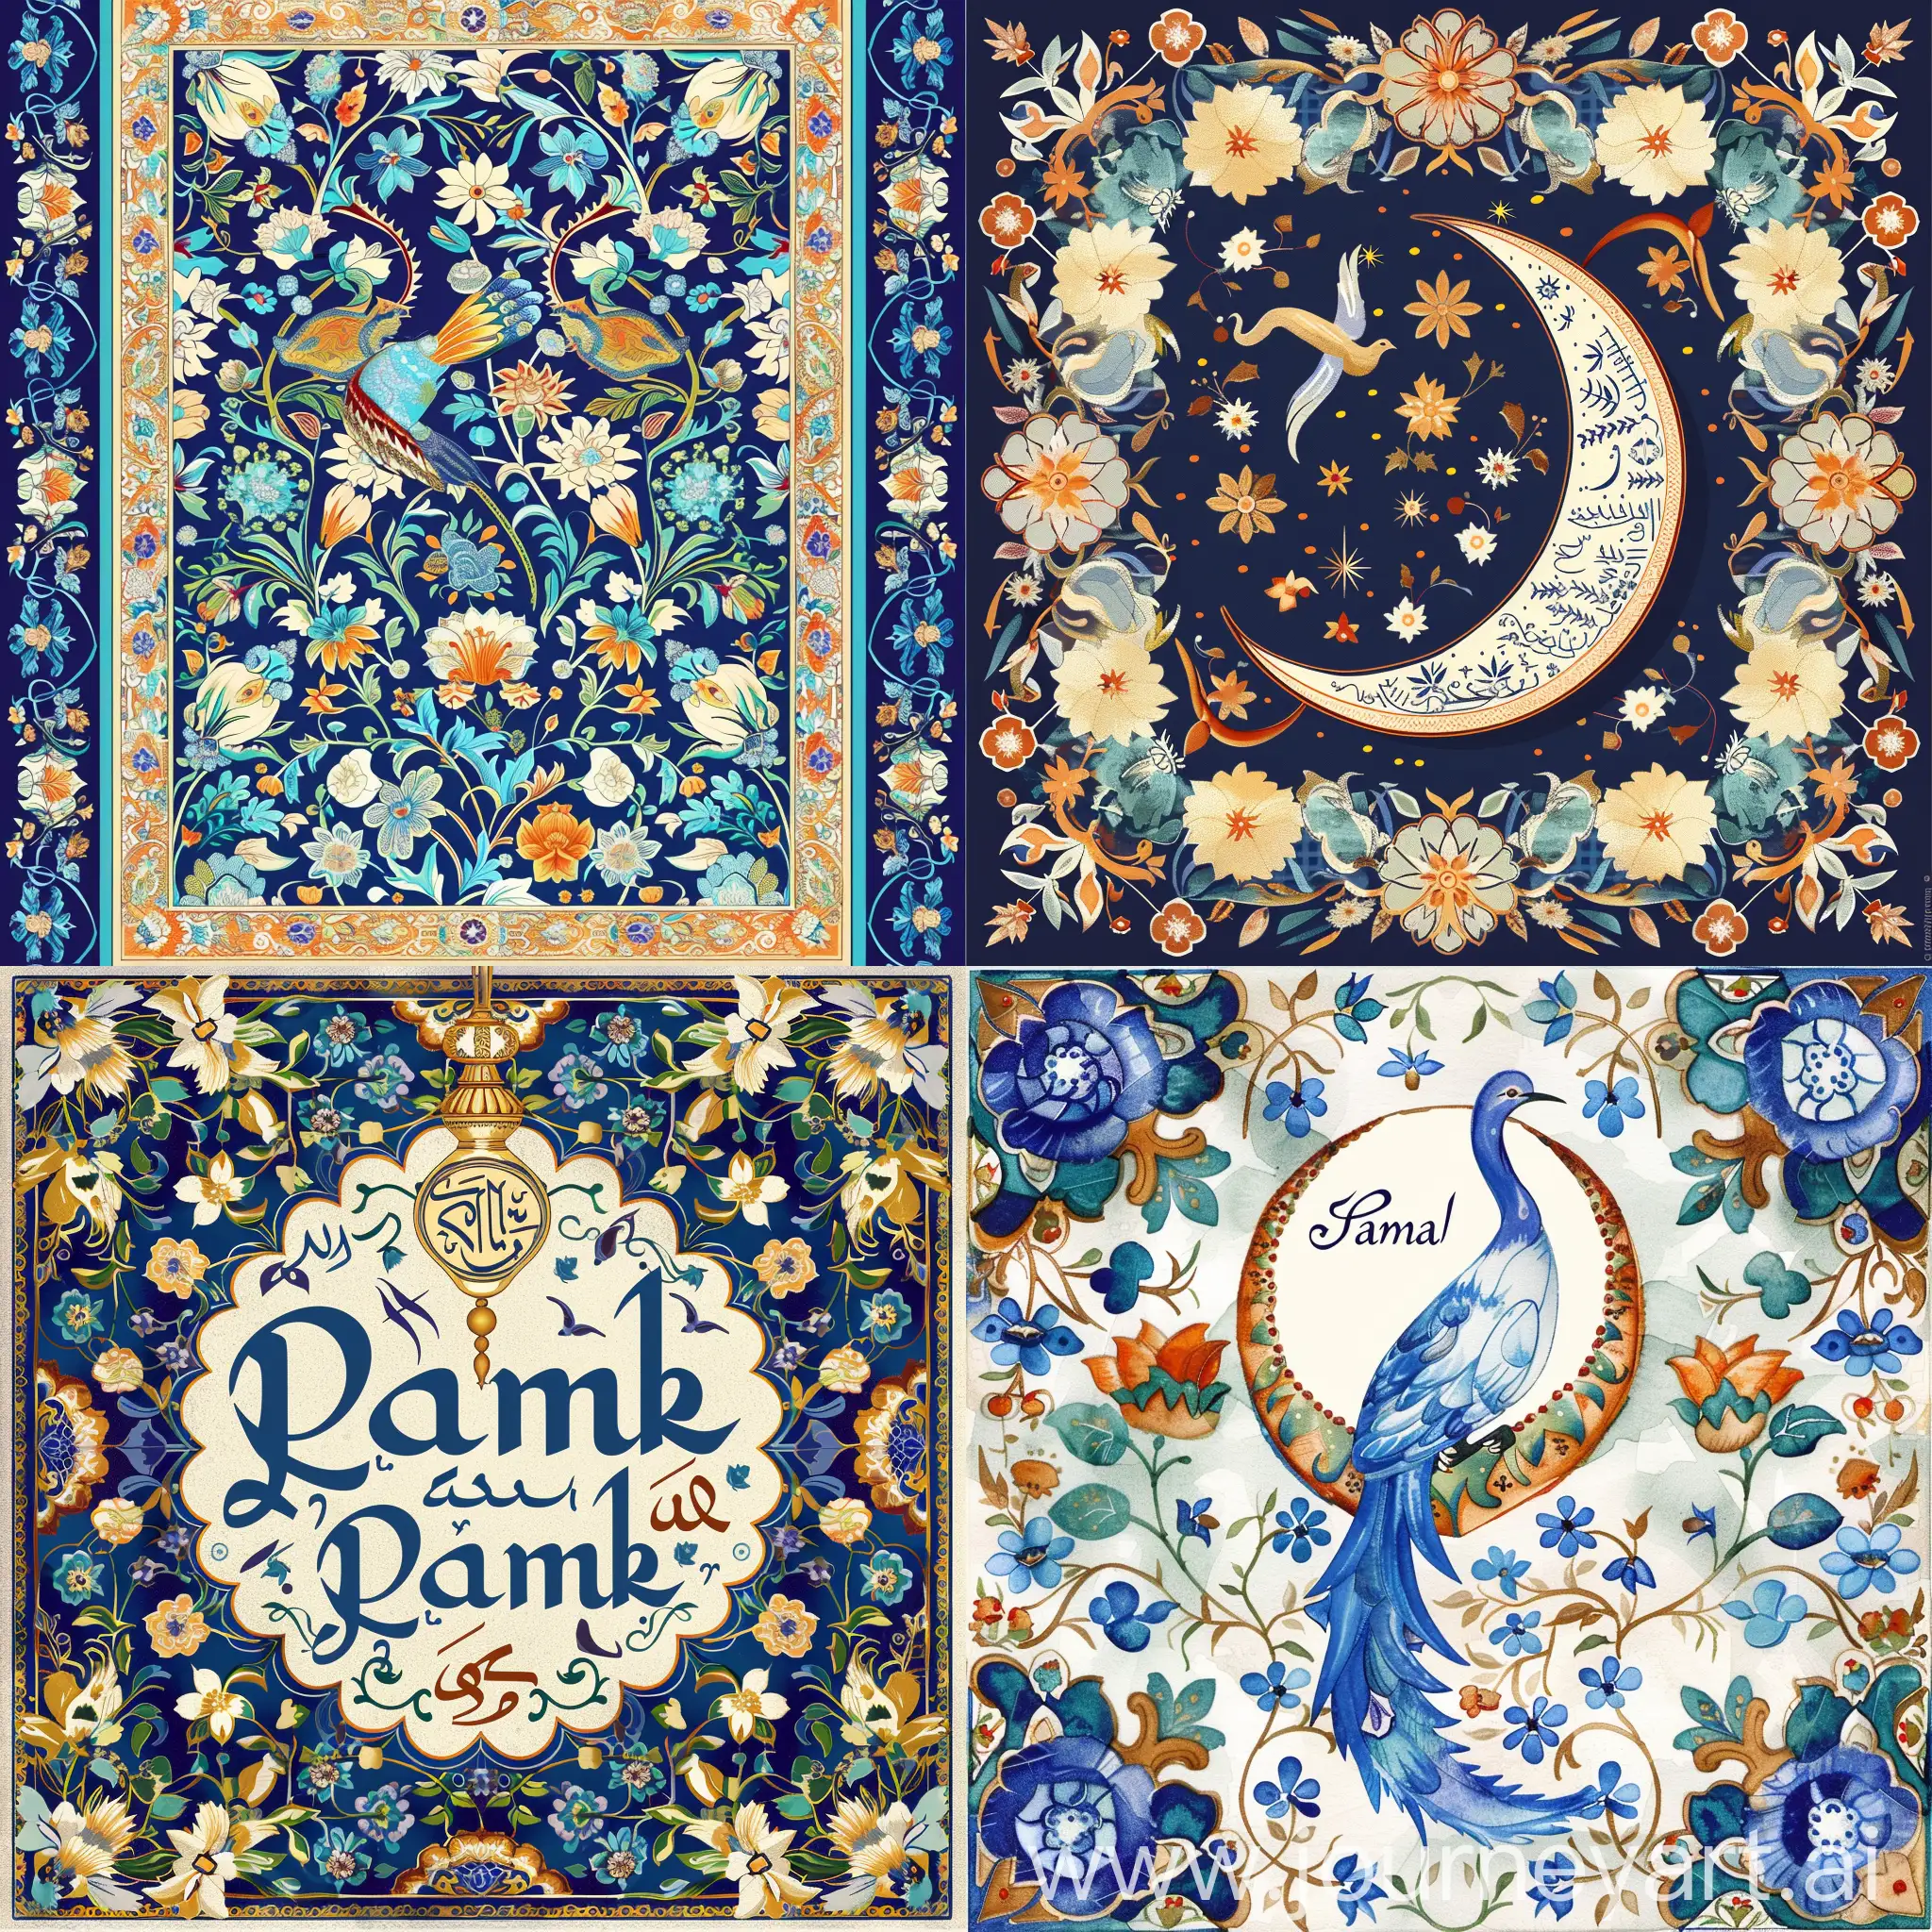 Ramadan-Greeting-Card-with-Islamic-Ottoman-Iznik-Tile-Background